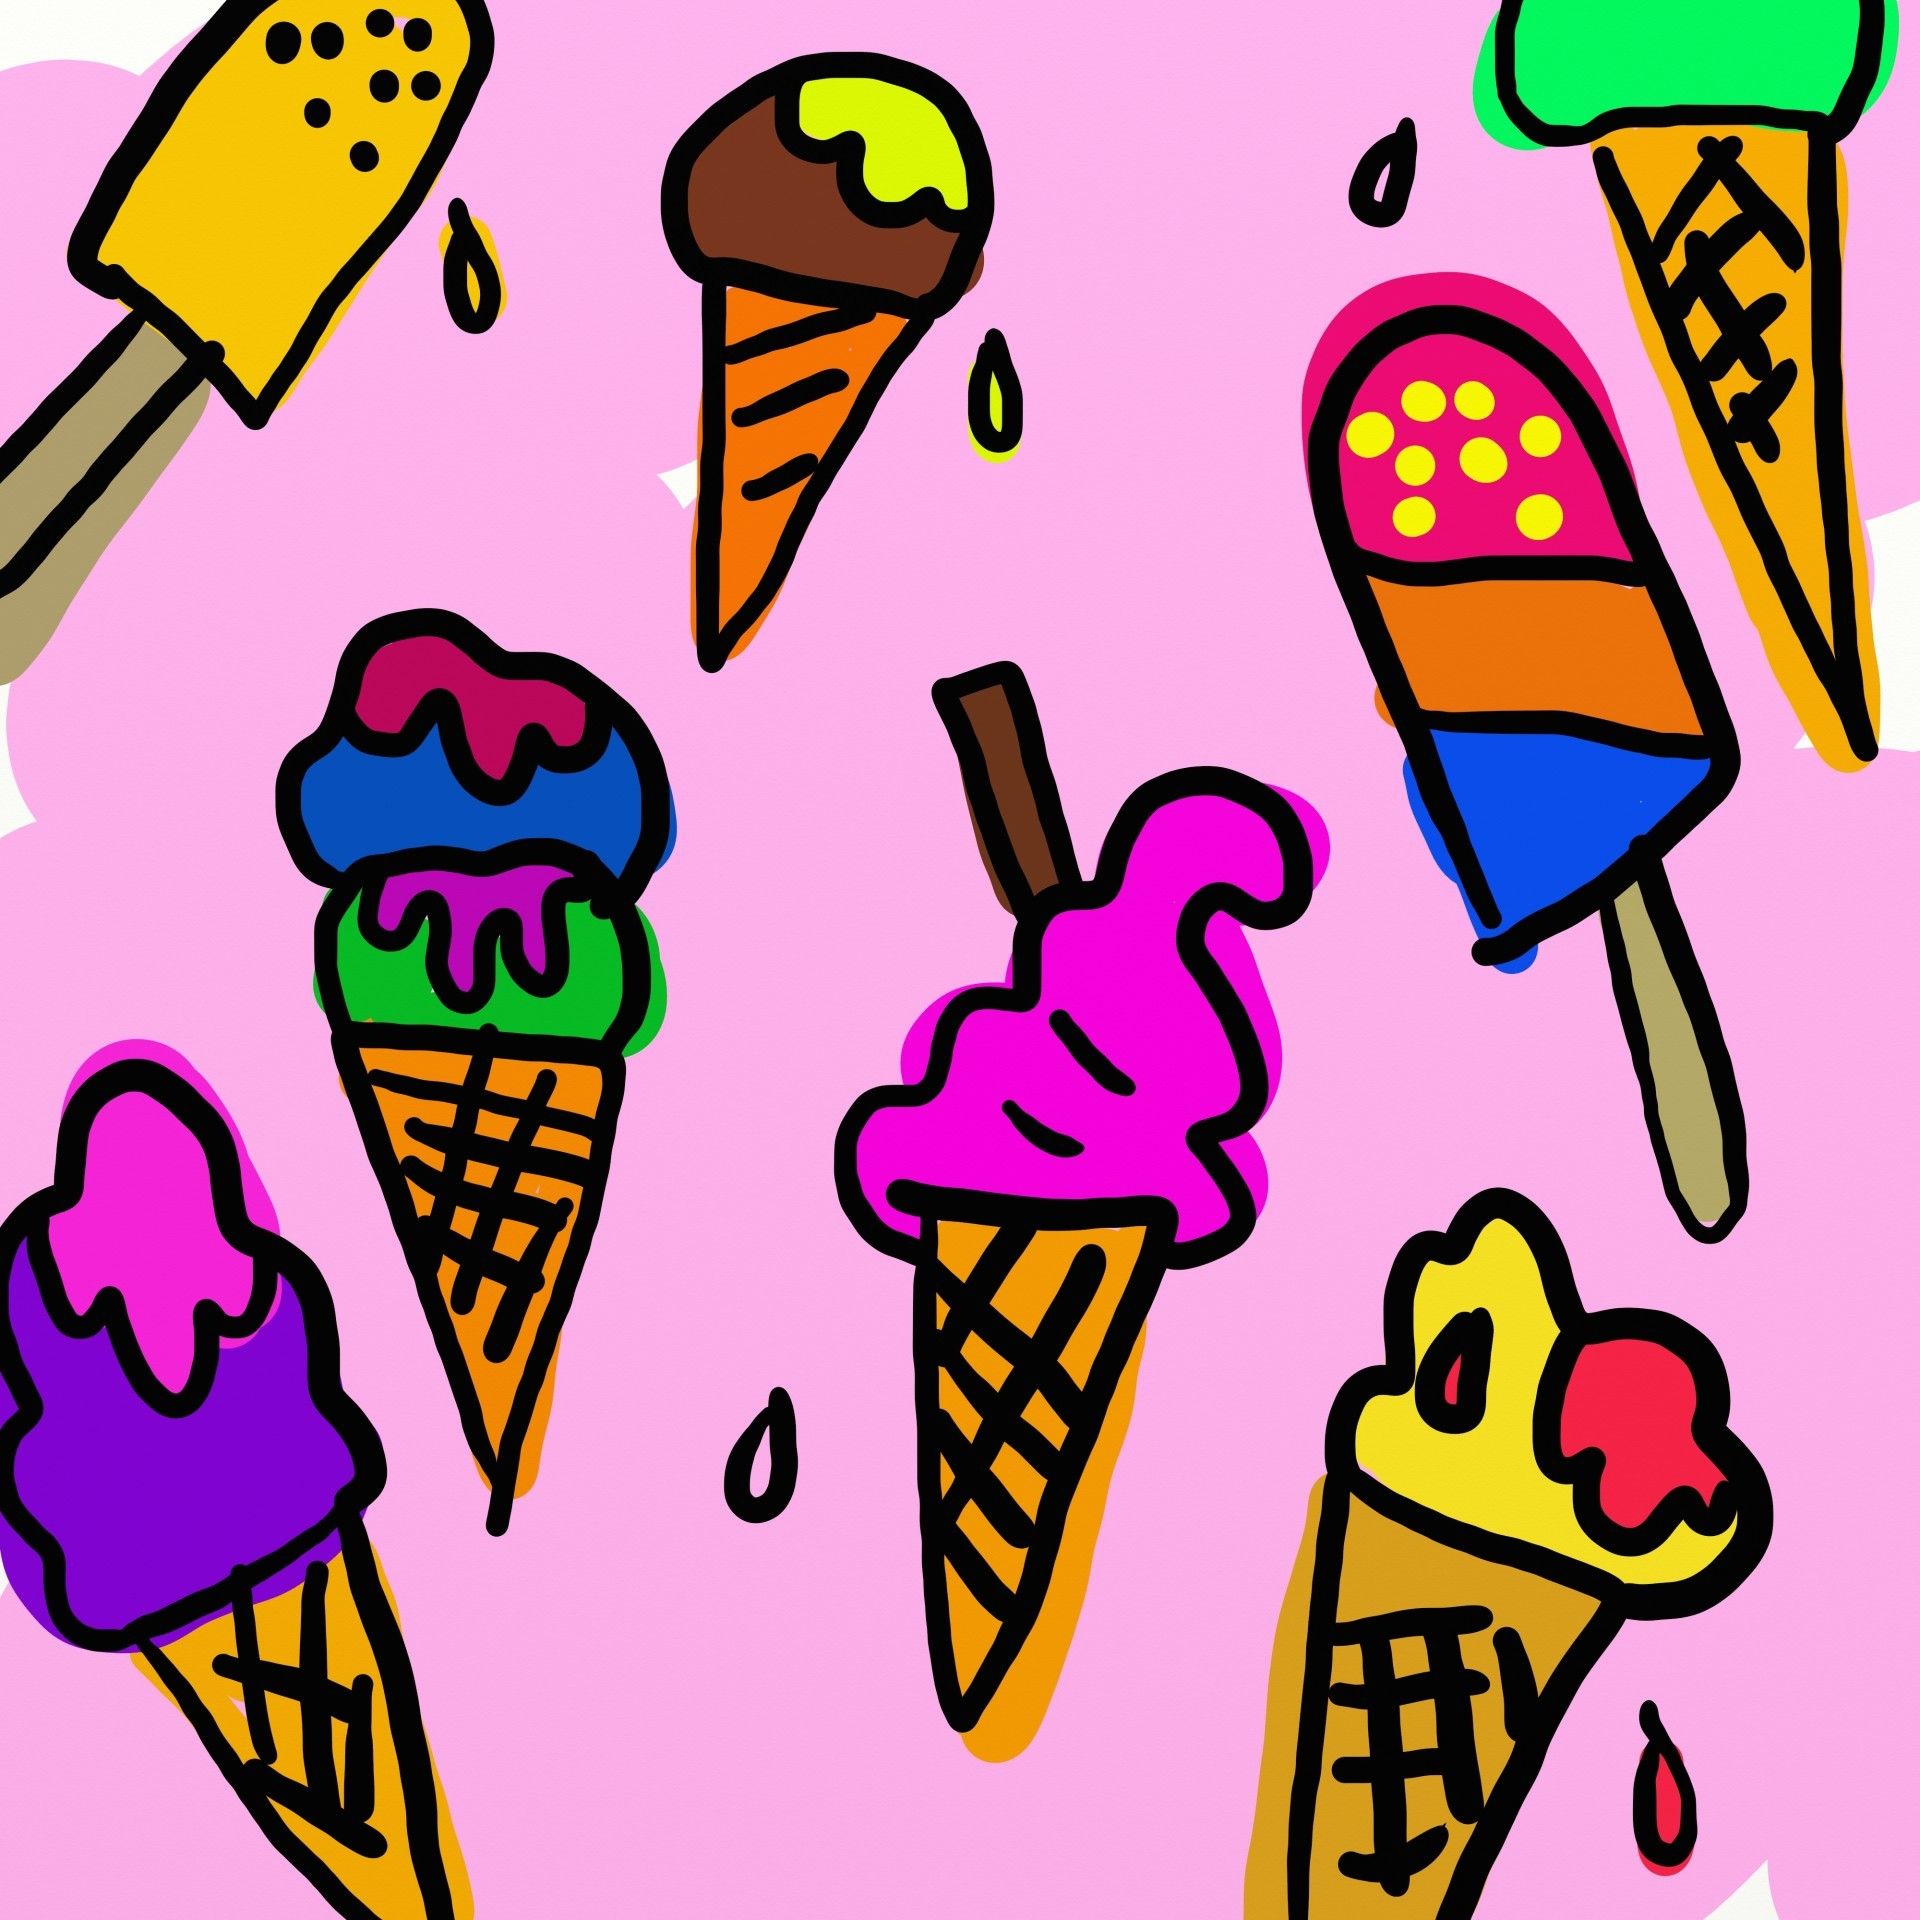 Ice Cream Cartoon Wallpaper Free Ice Cream Cartoon